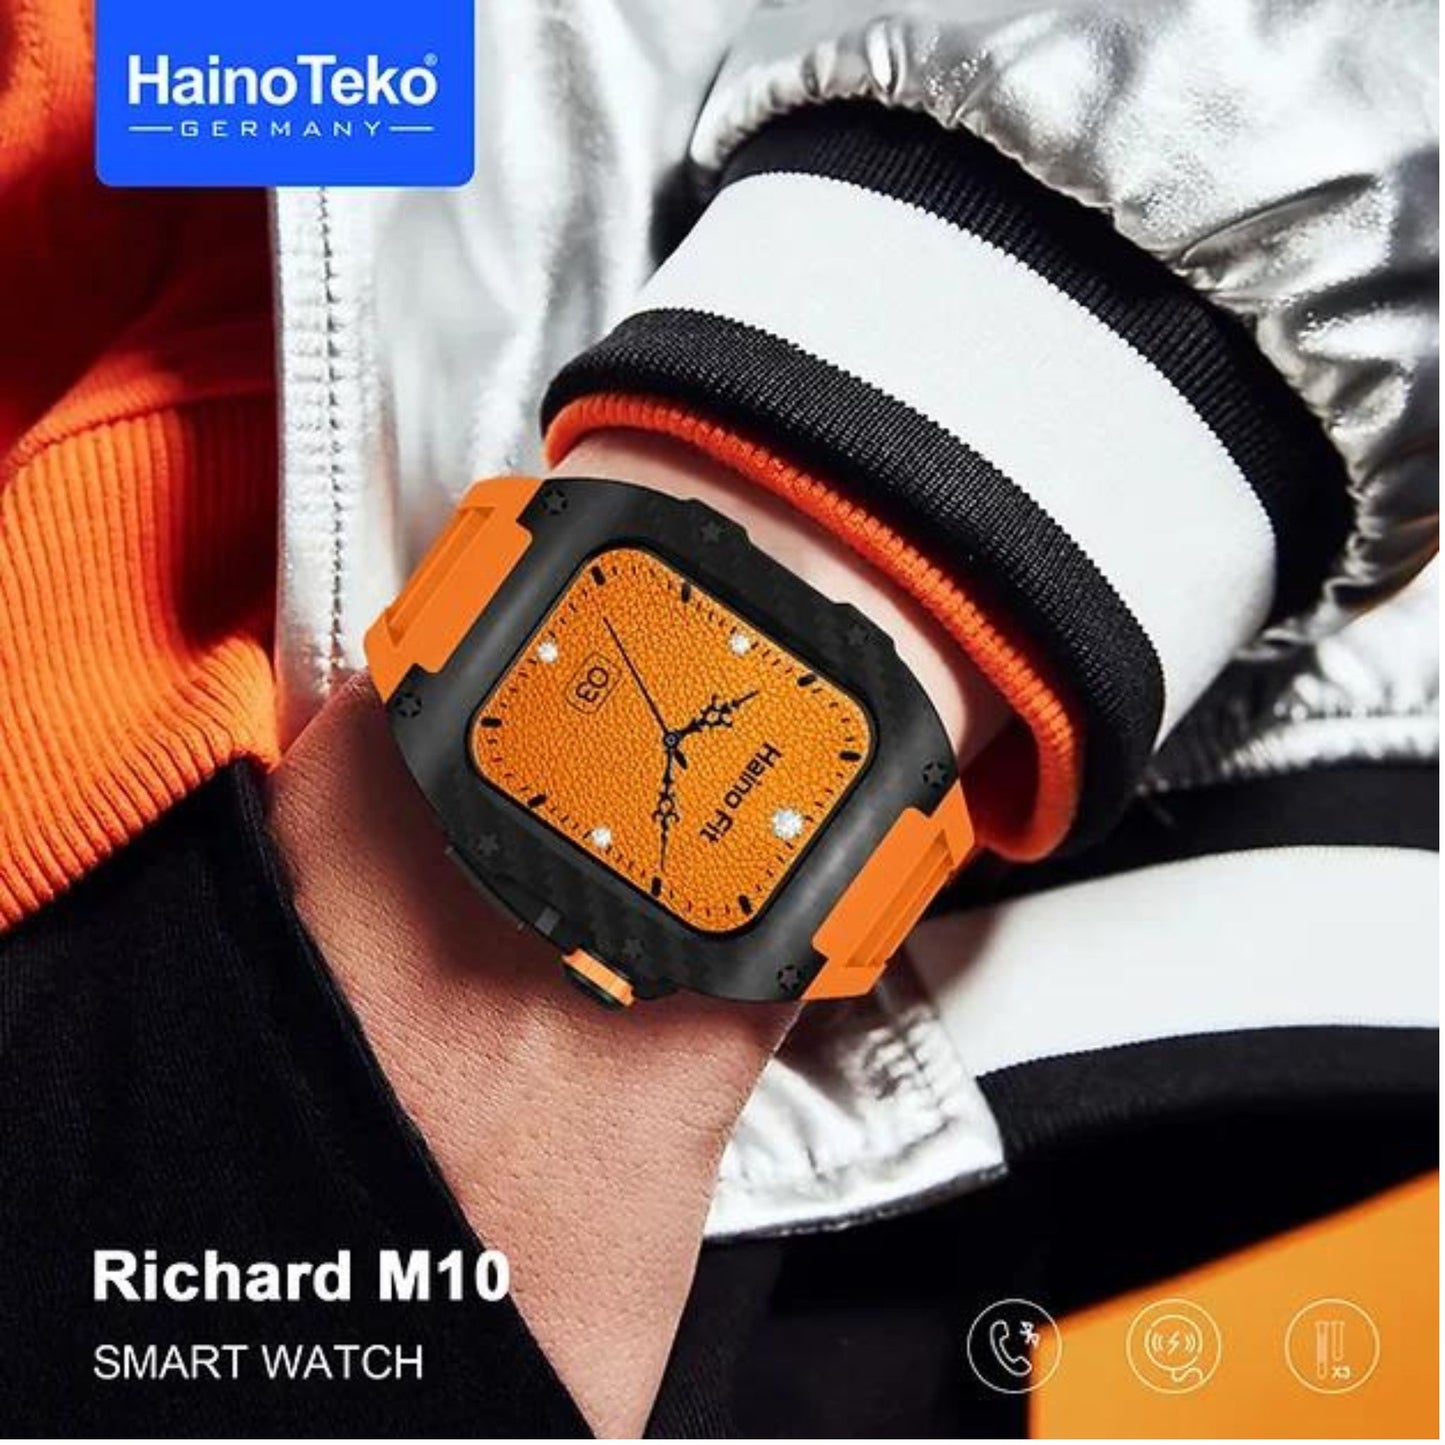 Premium Haino Teko Germany Richard M10 Smartwatch with 3 Pair Strap for Unisex Adults